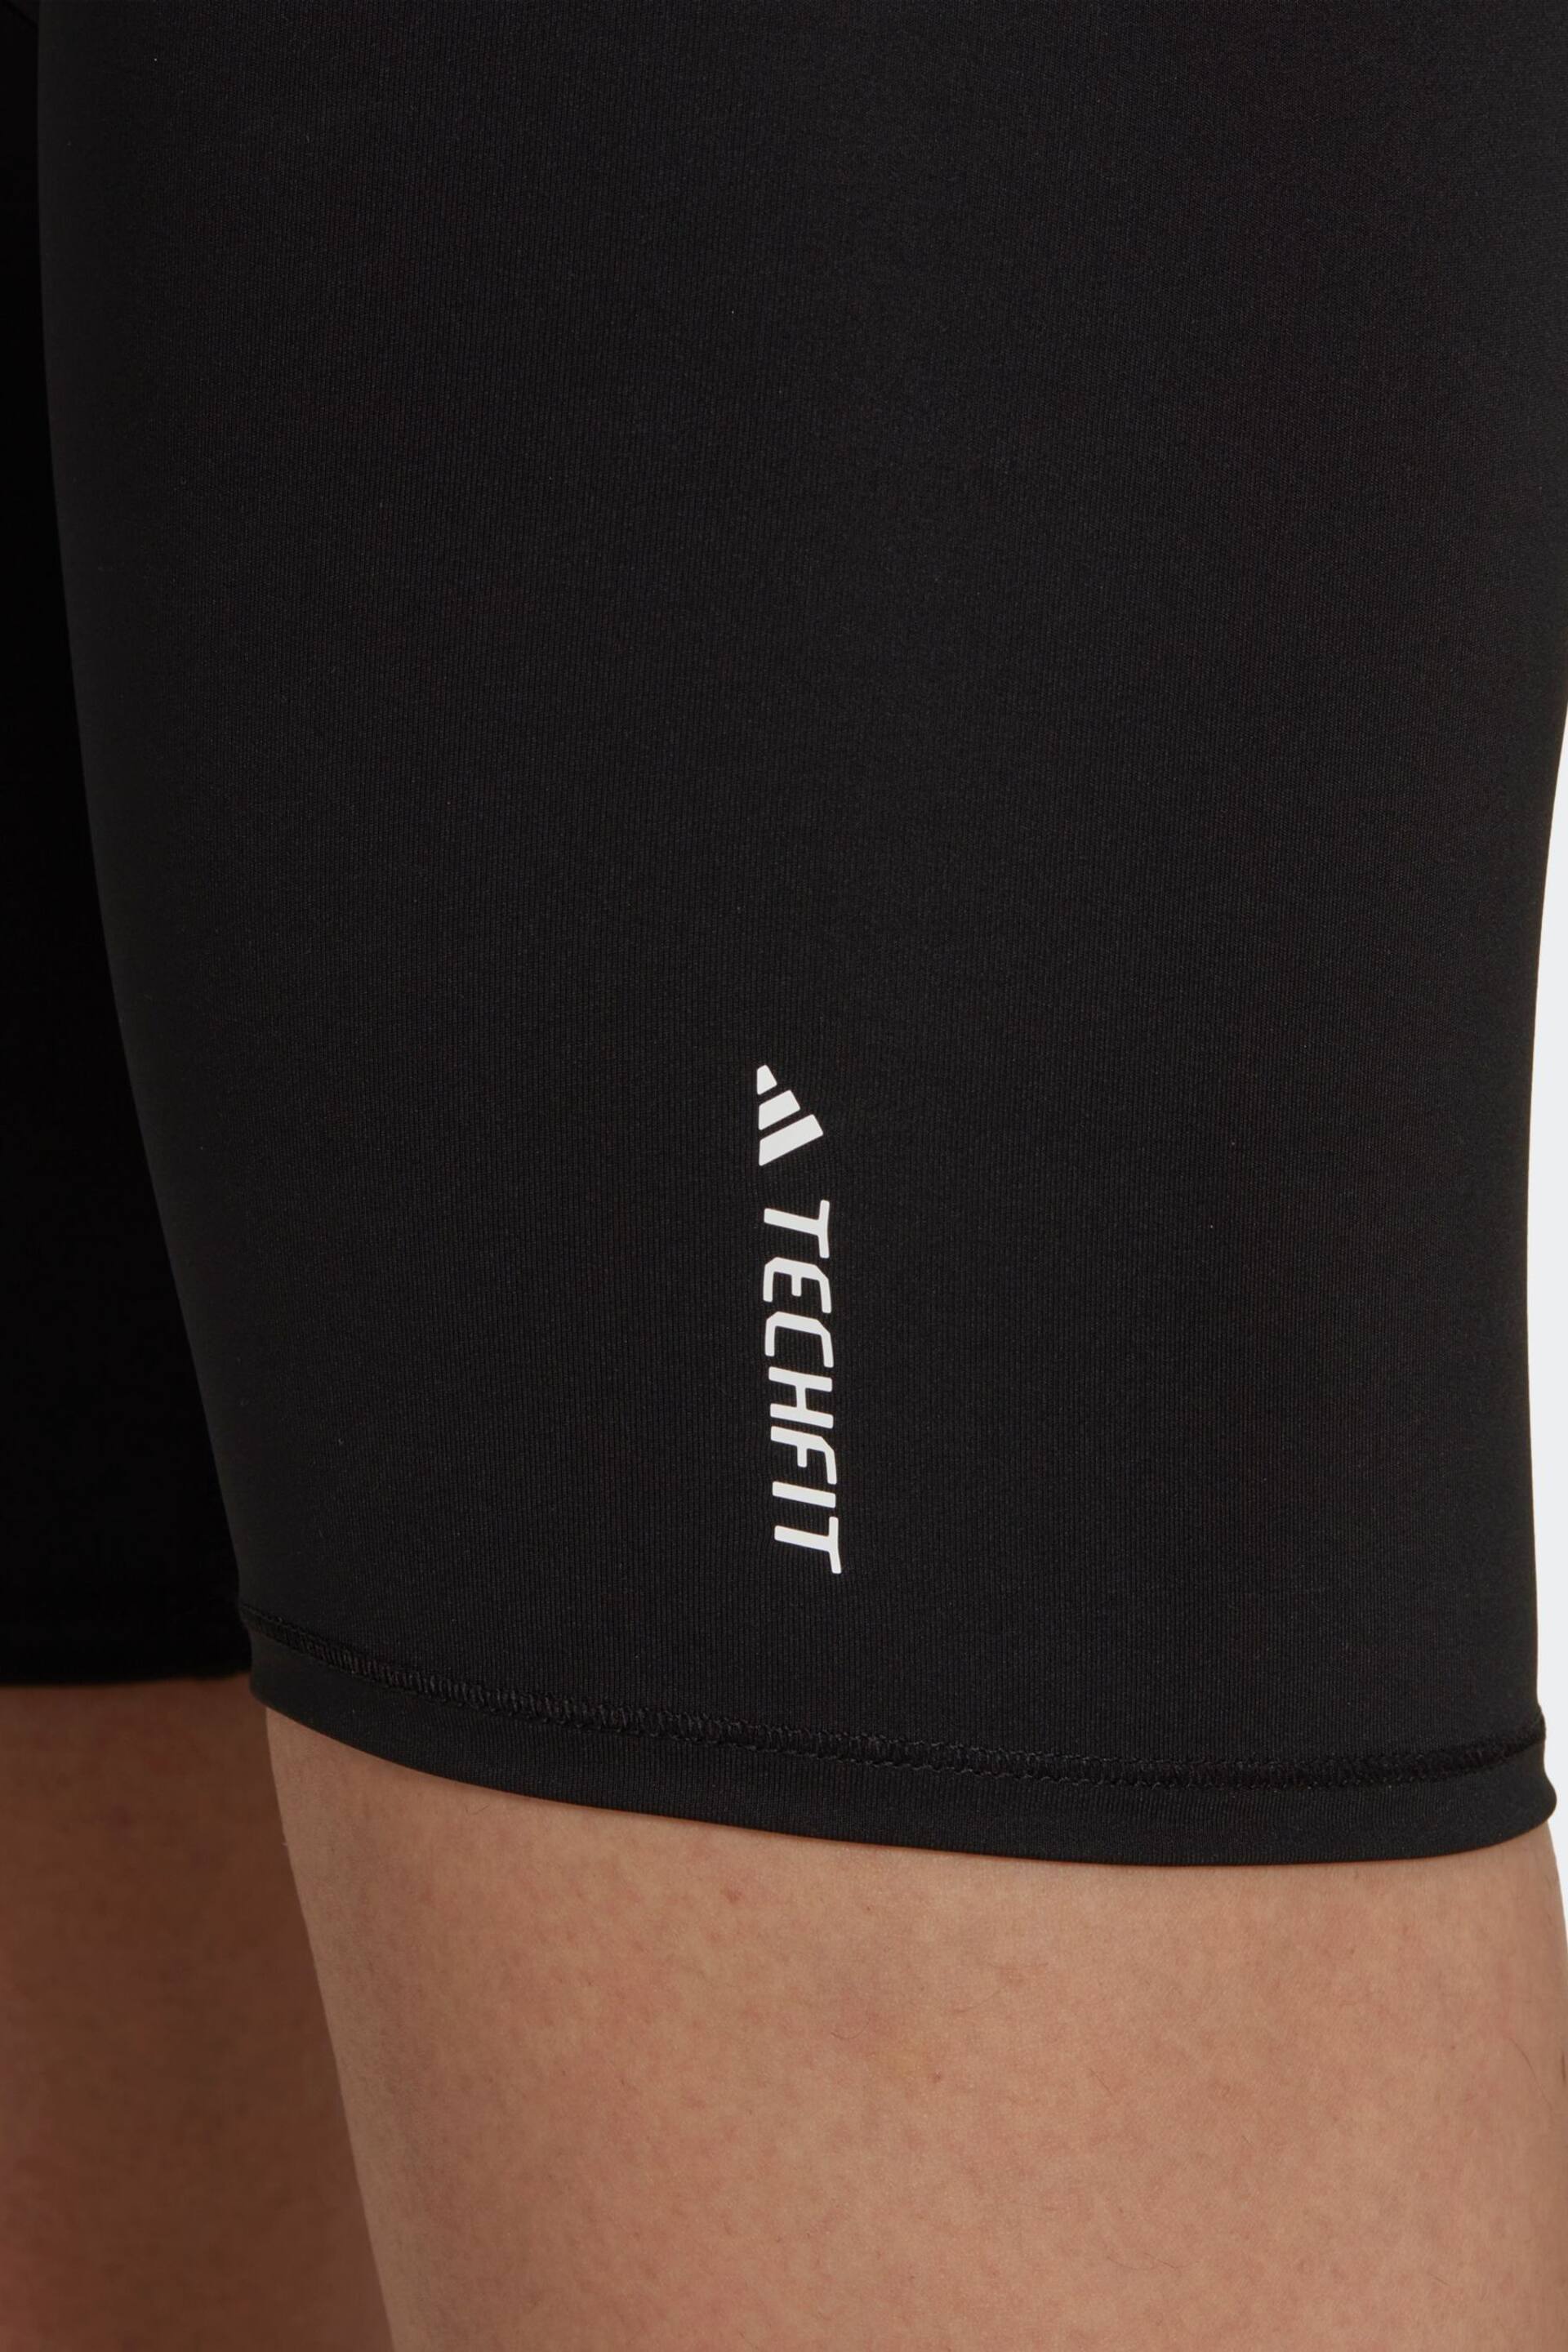 adidas Black Techfit Bike Shorts - Image 5 of 6